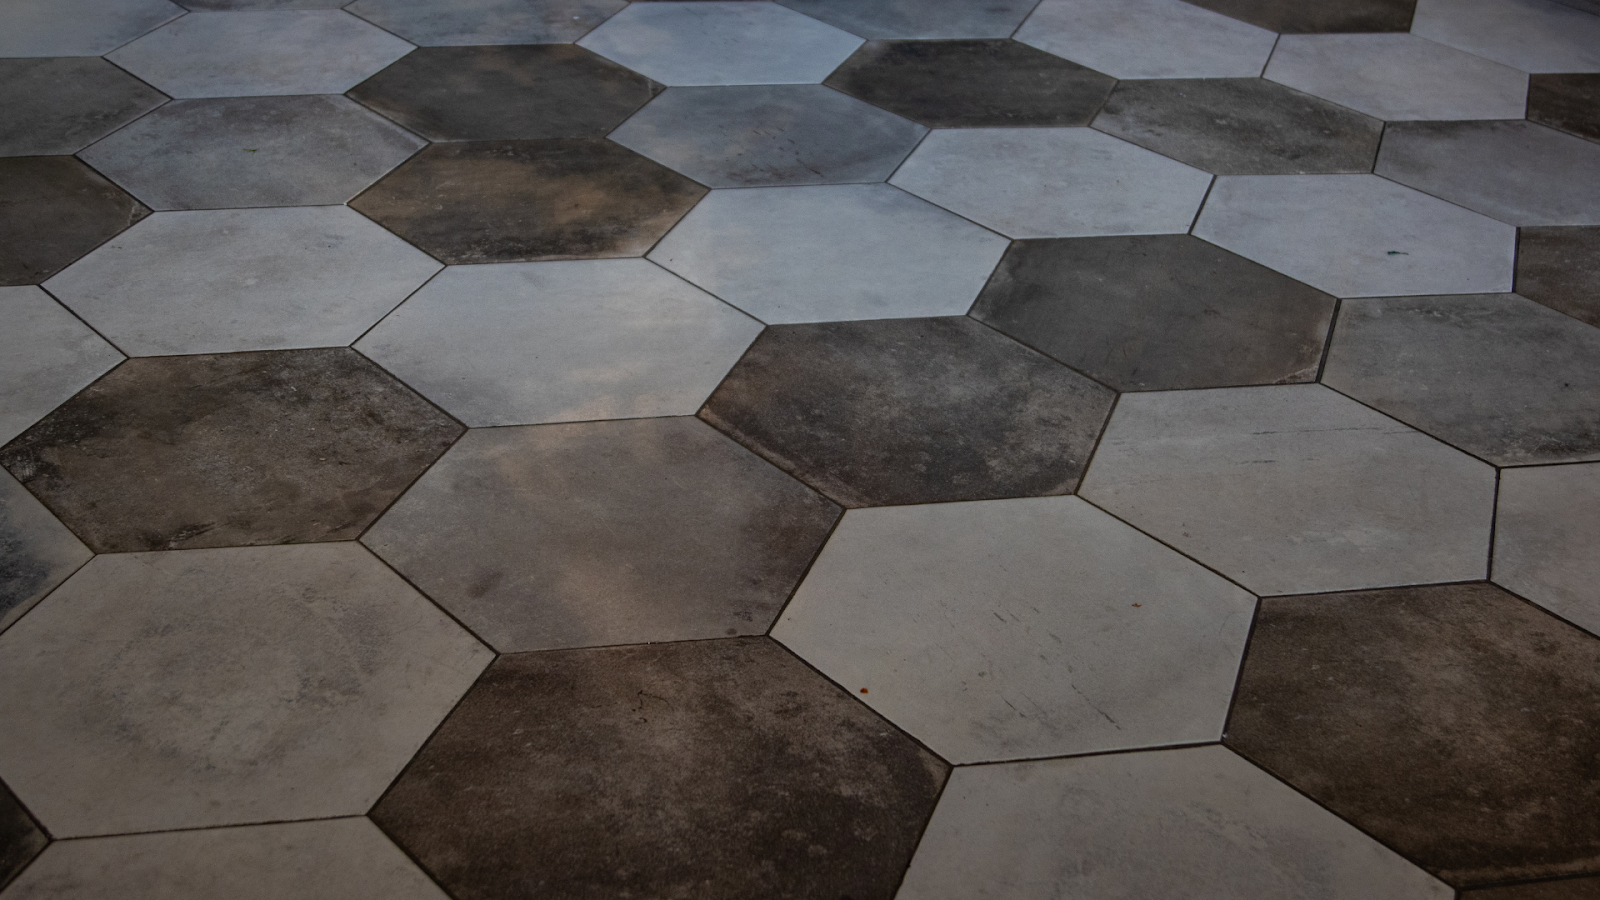 A checkerboard flooring pattern